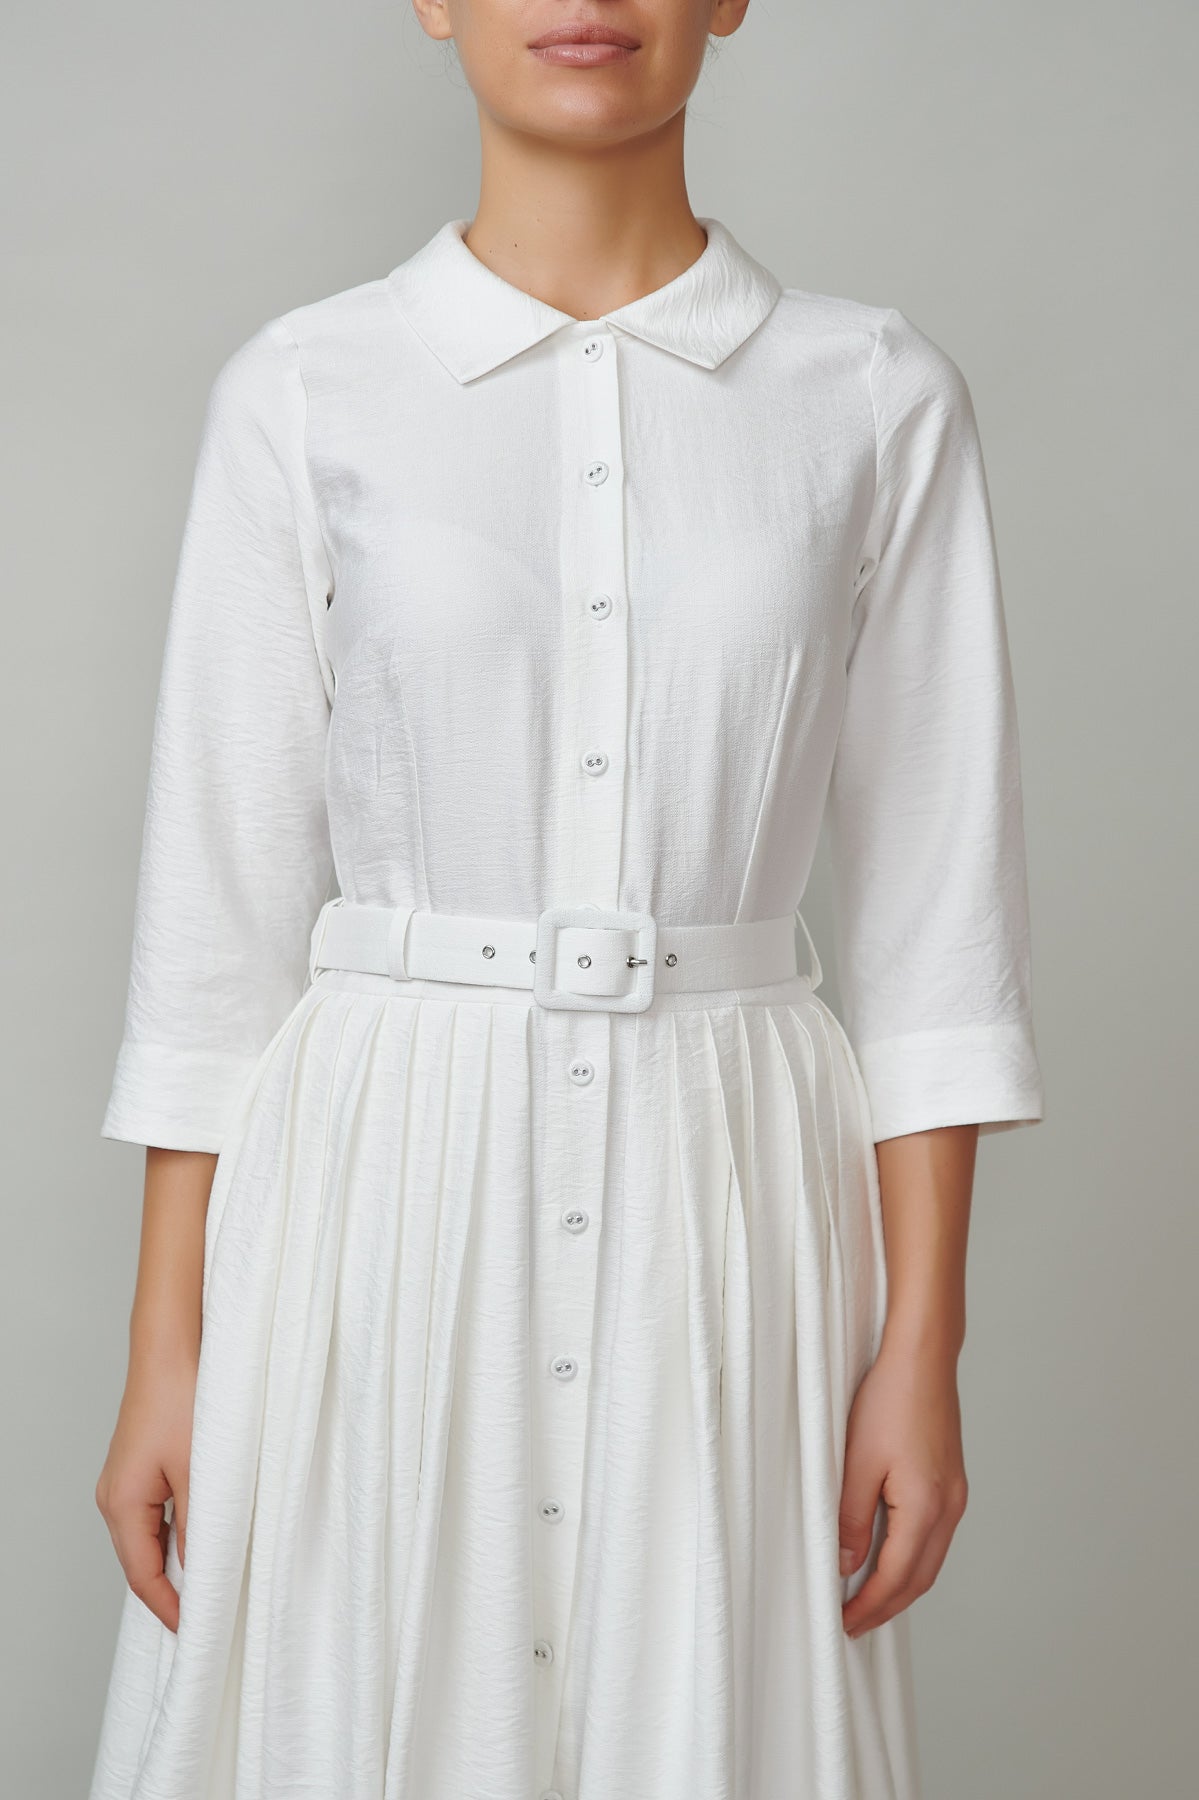 White shirt dress